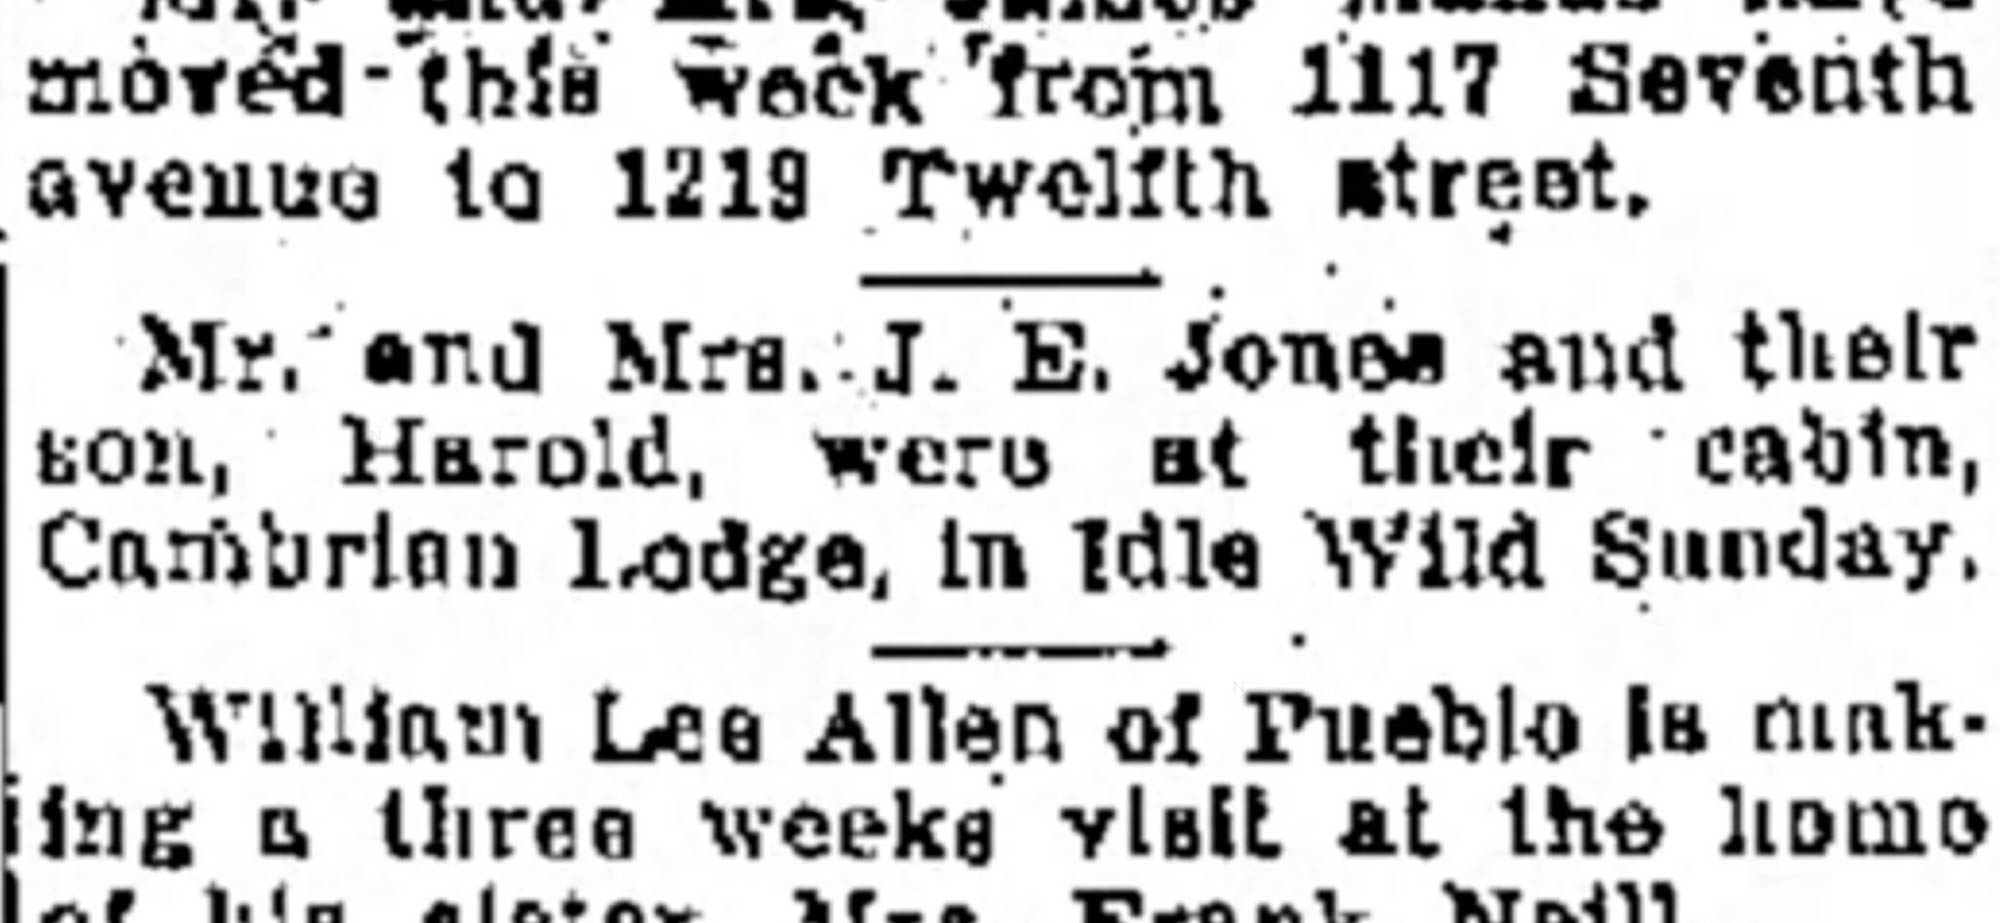 Idlewild Lodge - idlewildlodge.github.io - 1933-08-09 - Greeley Daily Tribune - Jones Family At Cambrian Lodge